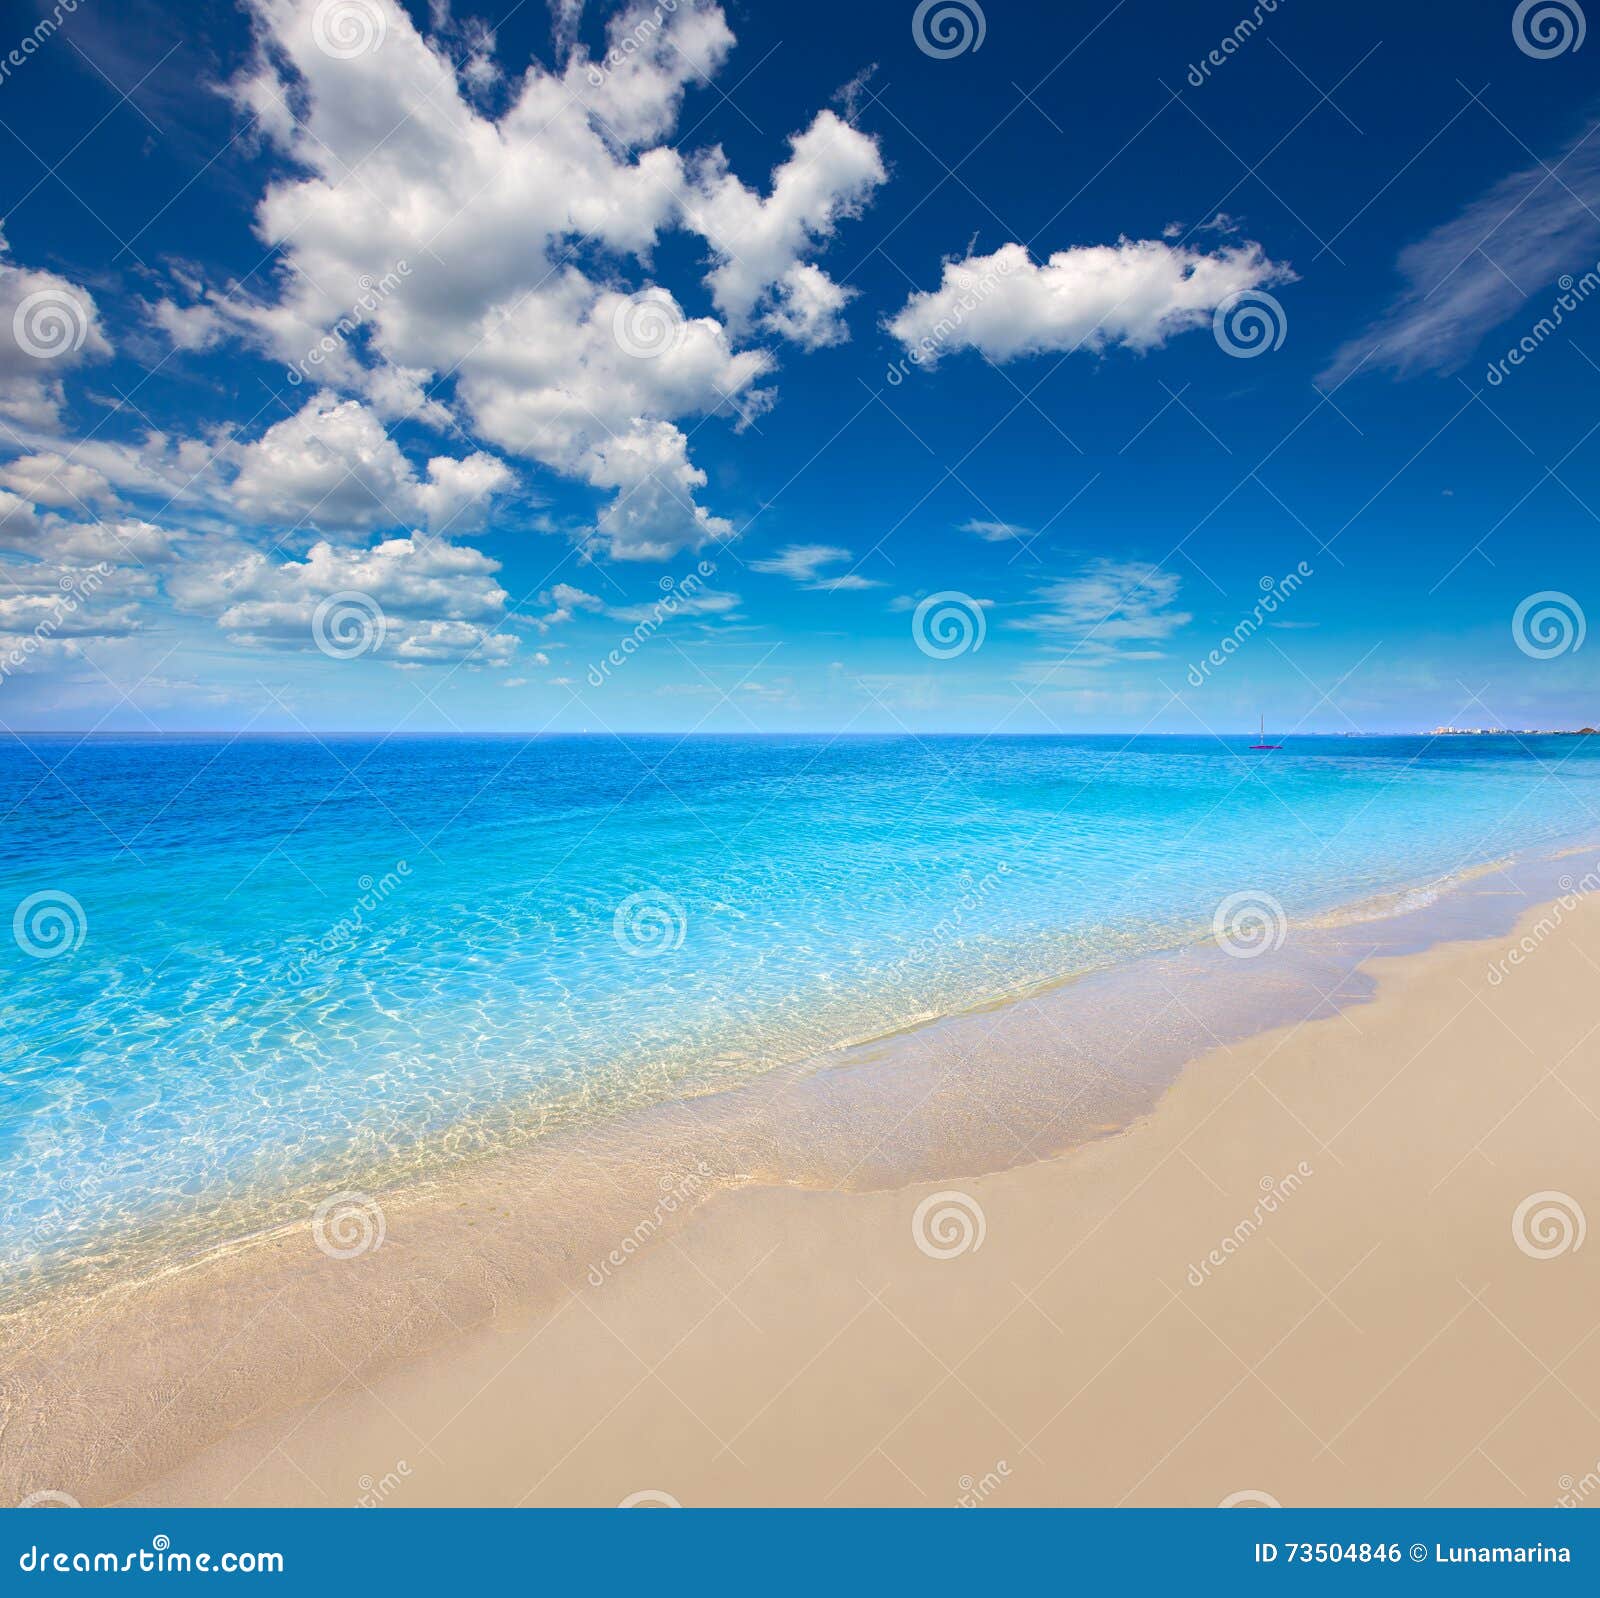 florida bonita bay barefoot beach us